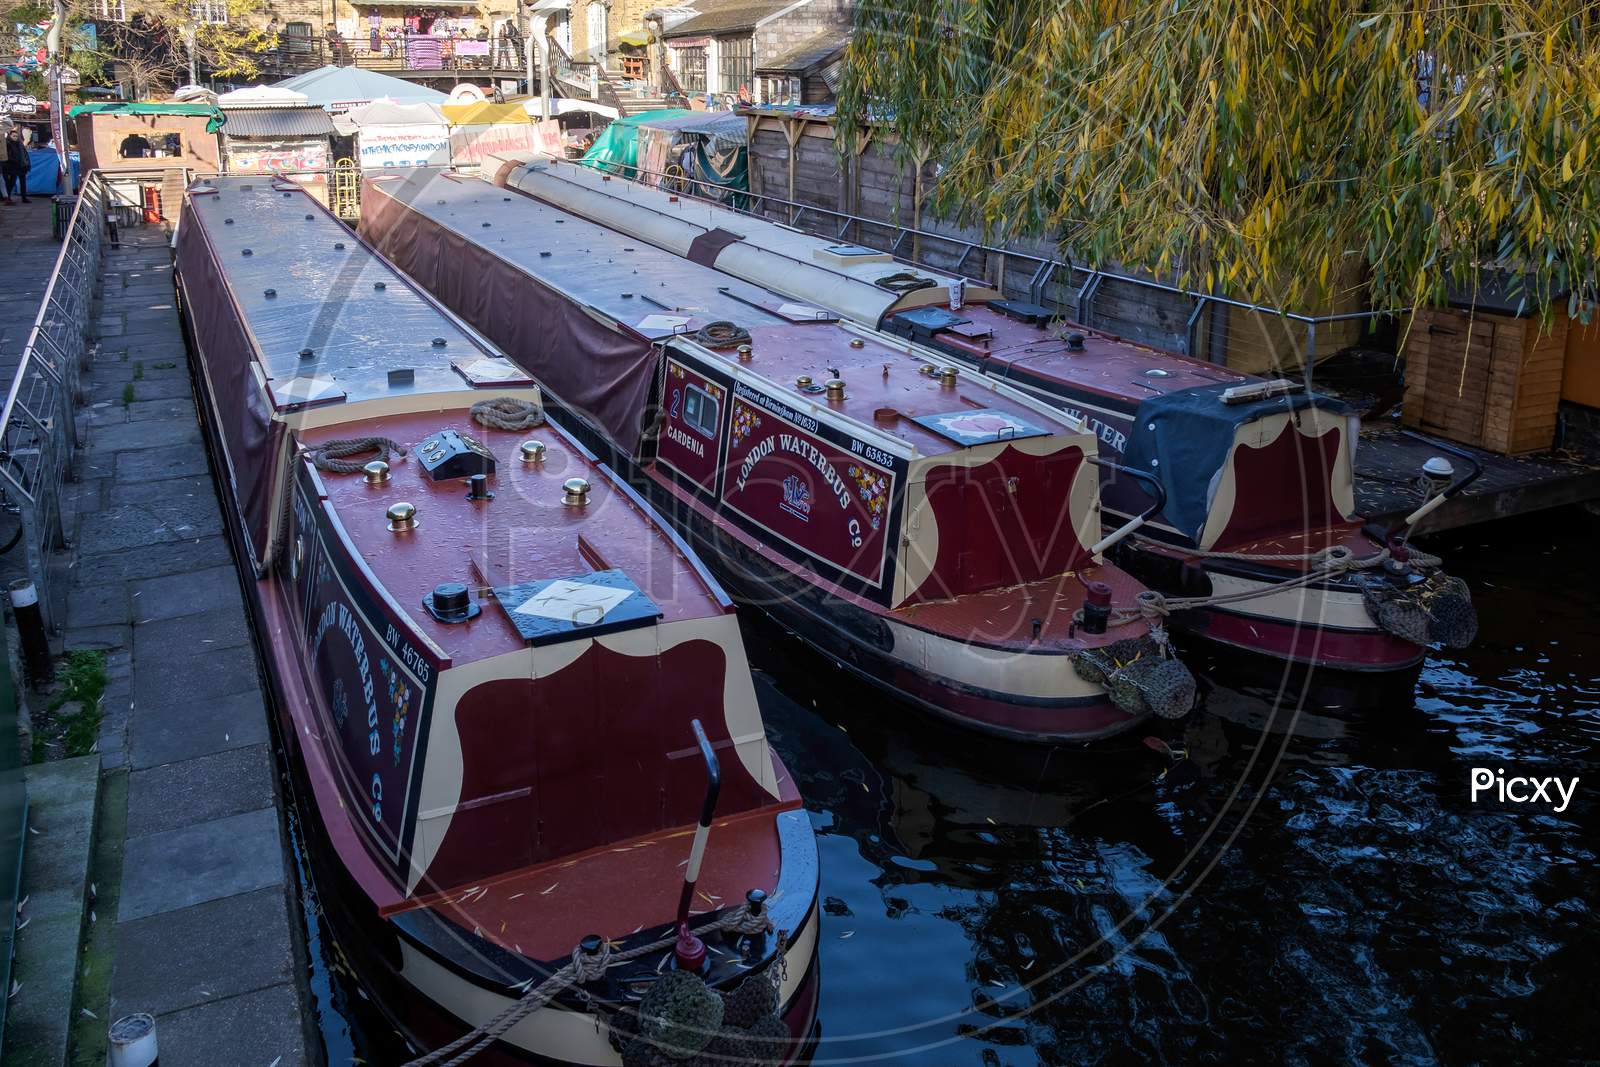 Narrow Boats On The Regent'S Canal At Camden Lock